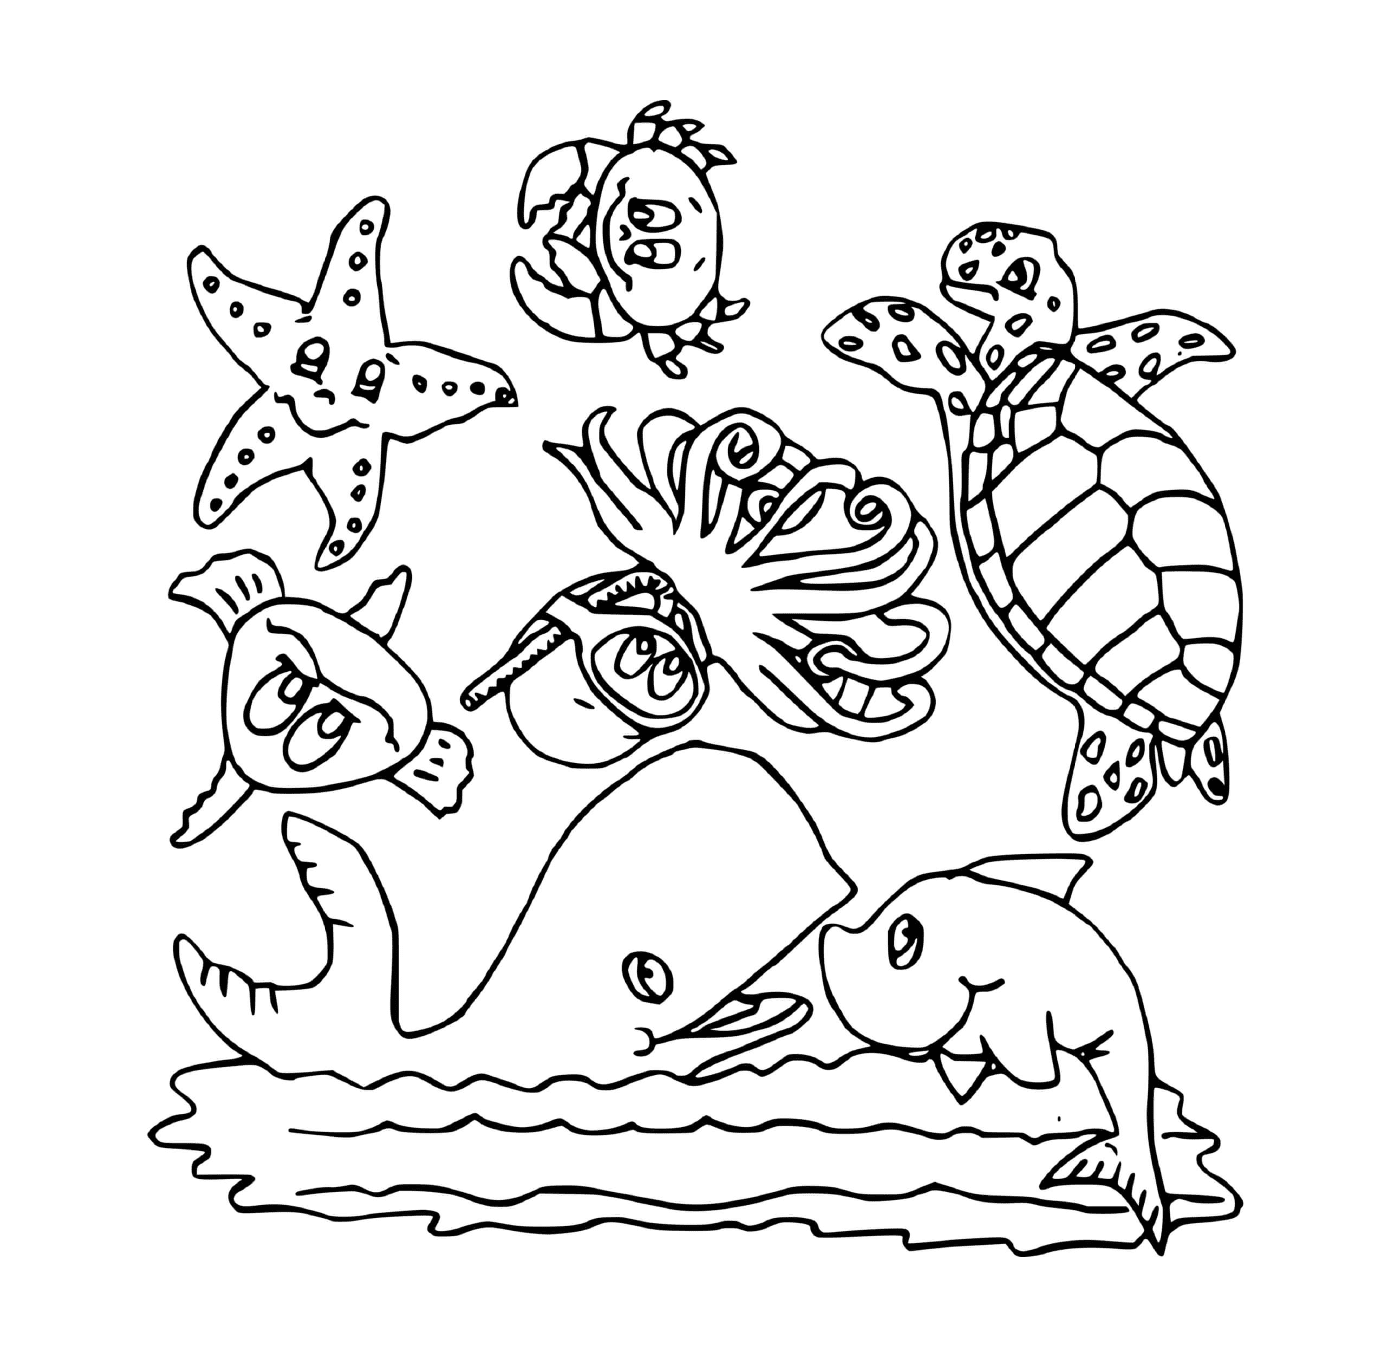  Varios animales marinos 